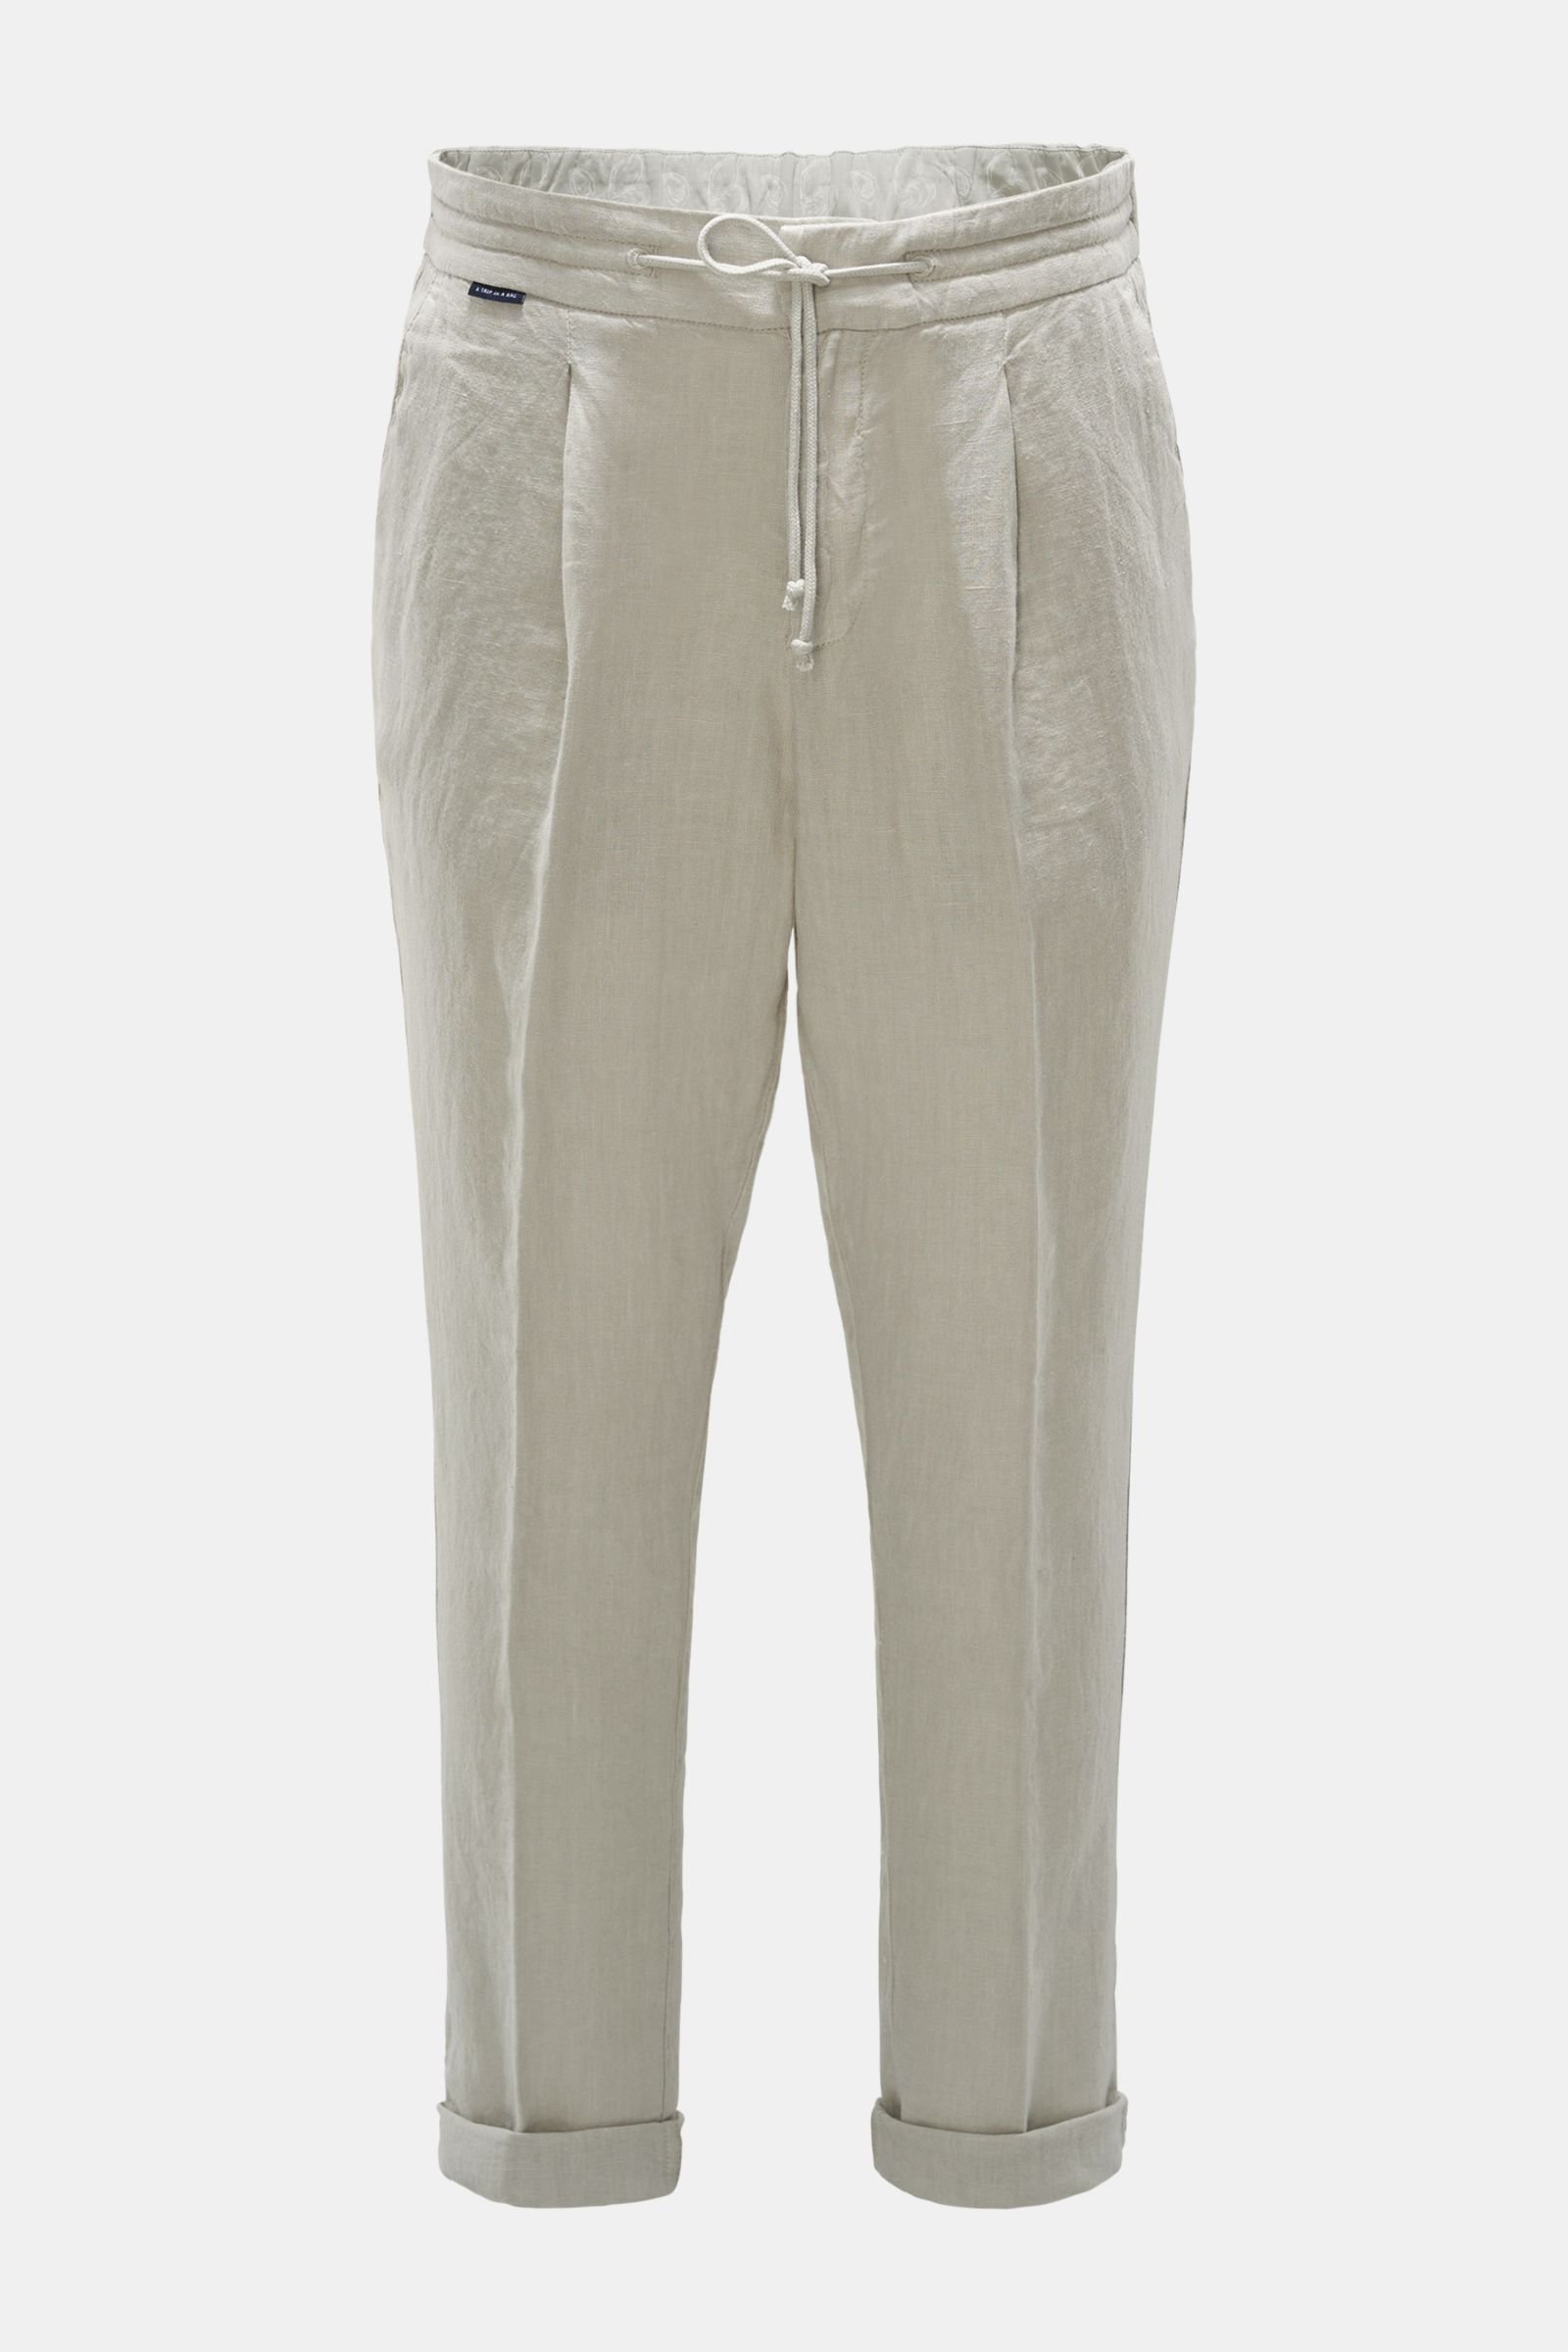 Linen jogger pants 'Linen Pleated Pant' light grey